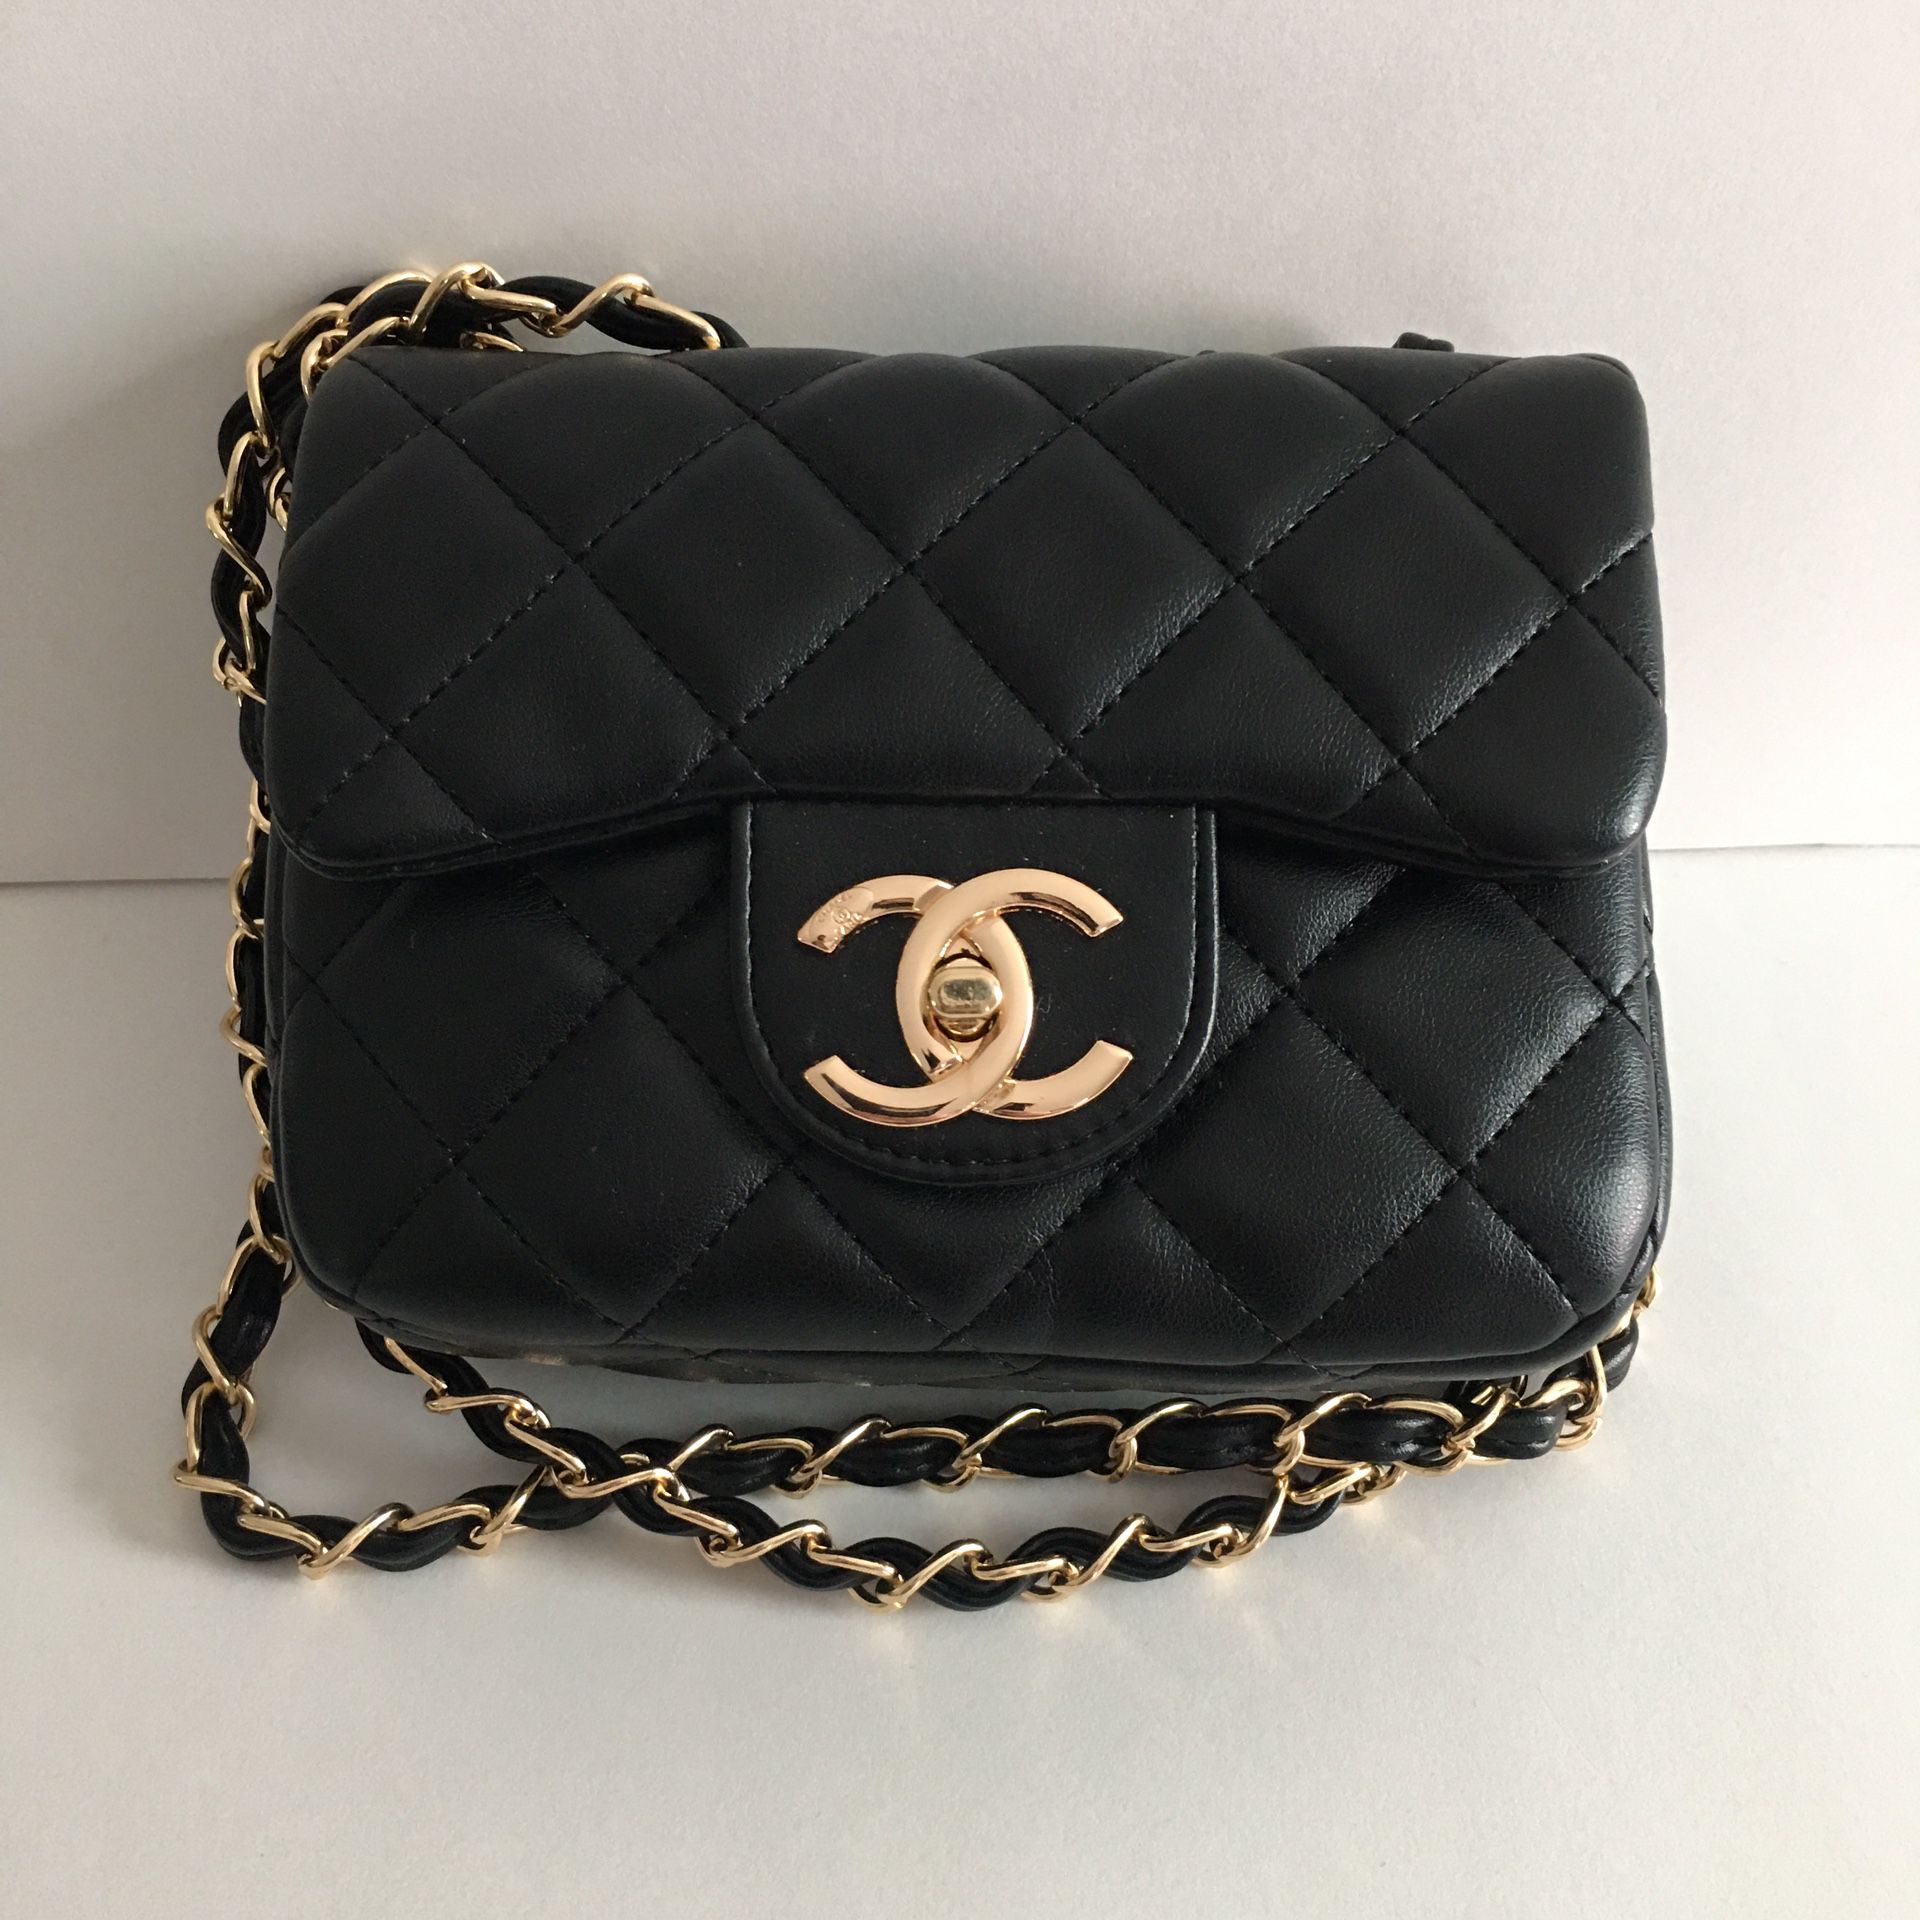 Chanel Black leather bag brand new